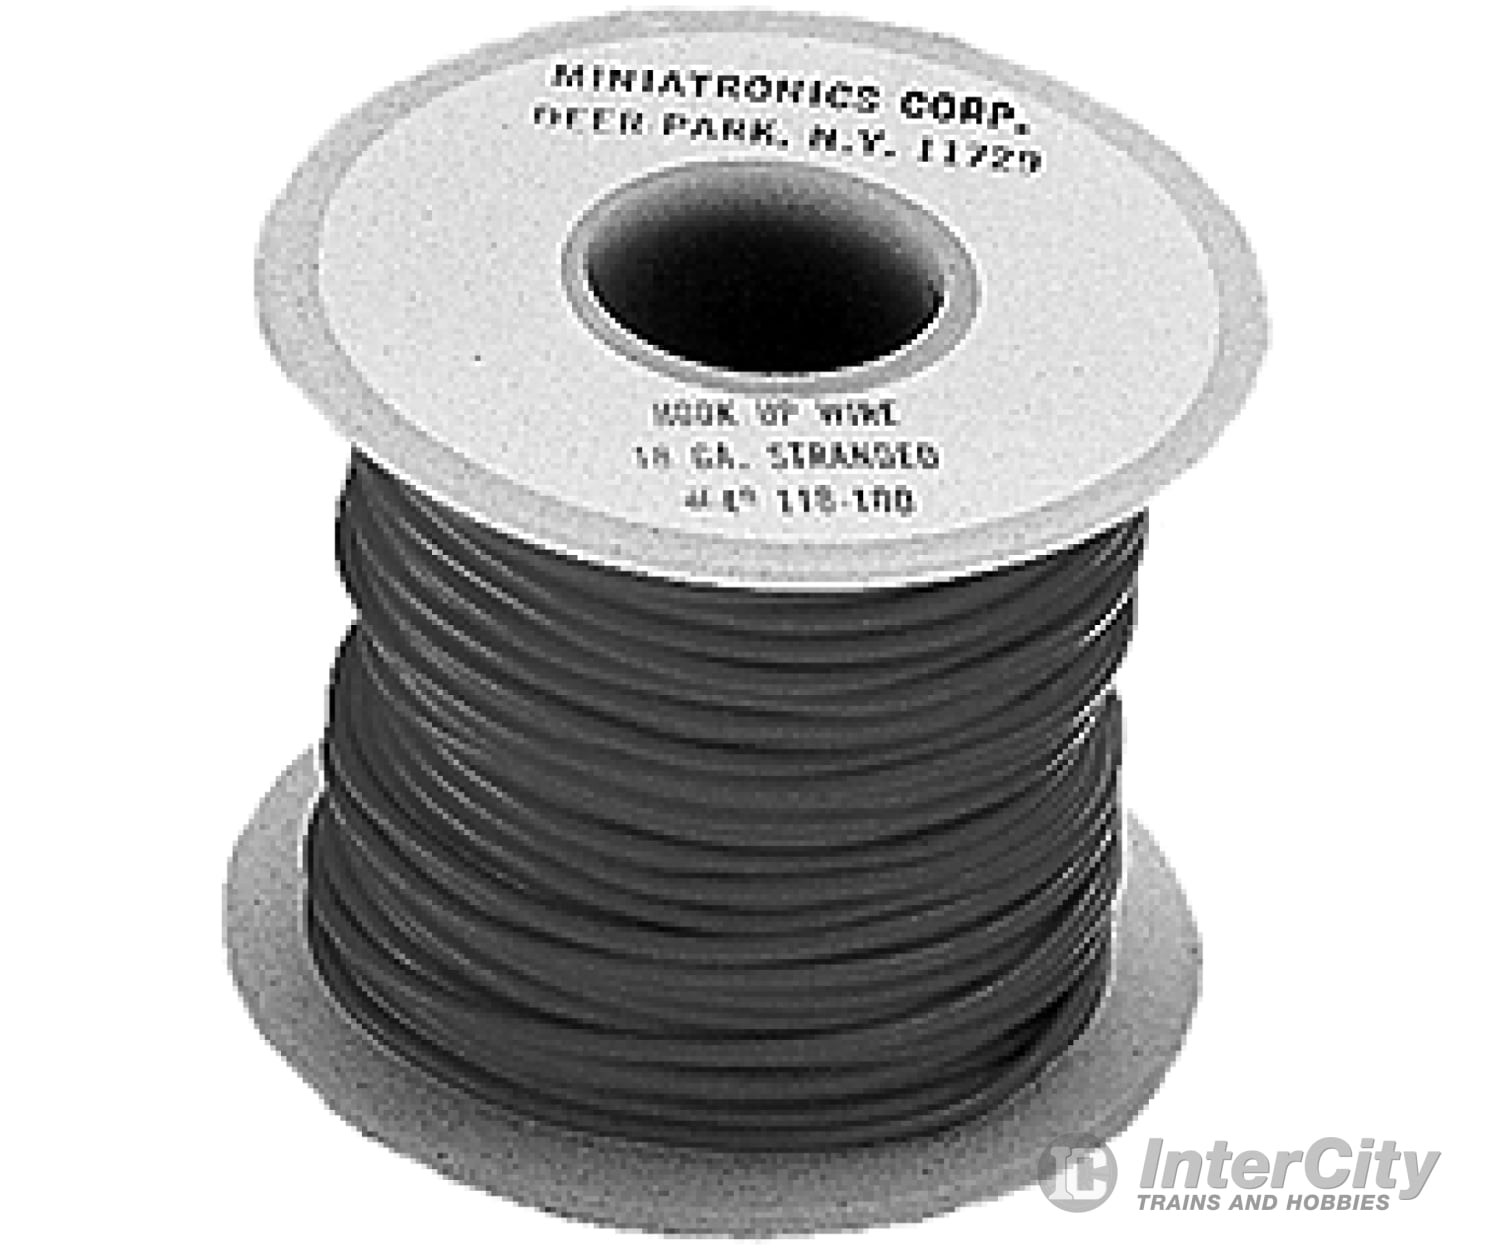 http://ictrainsandhobbies.com/cdn/shop/files/miniatronics-corp-4818001-18-gauge-stranded-single-conductor-wire-100-30m-black-lights-electronics-253.jpg?v=1698993328